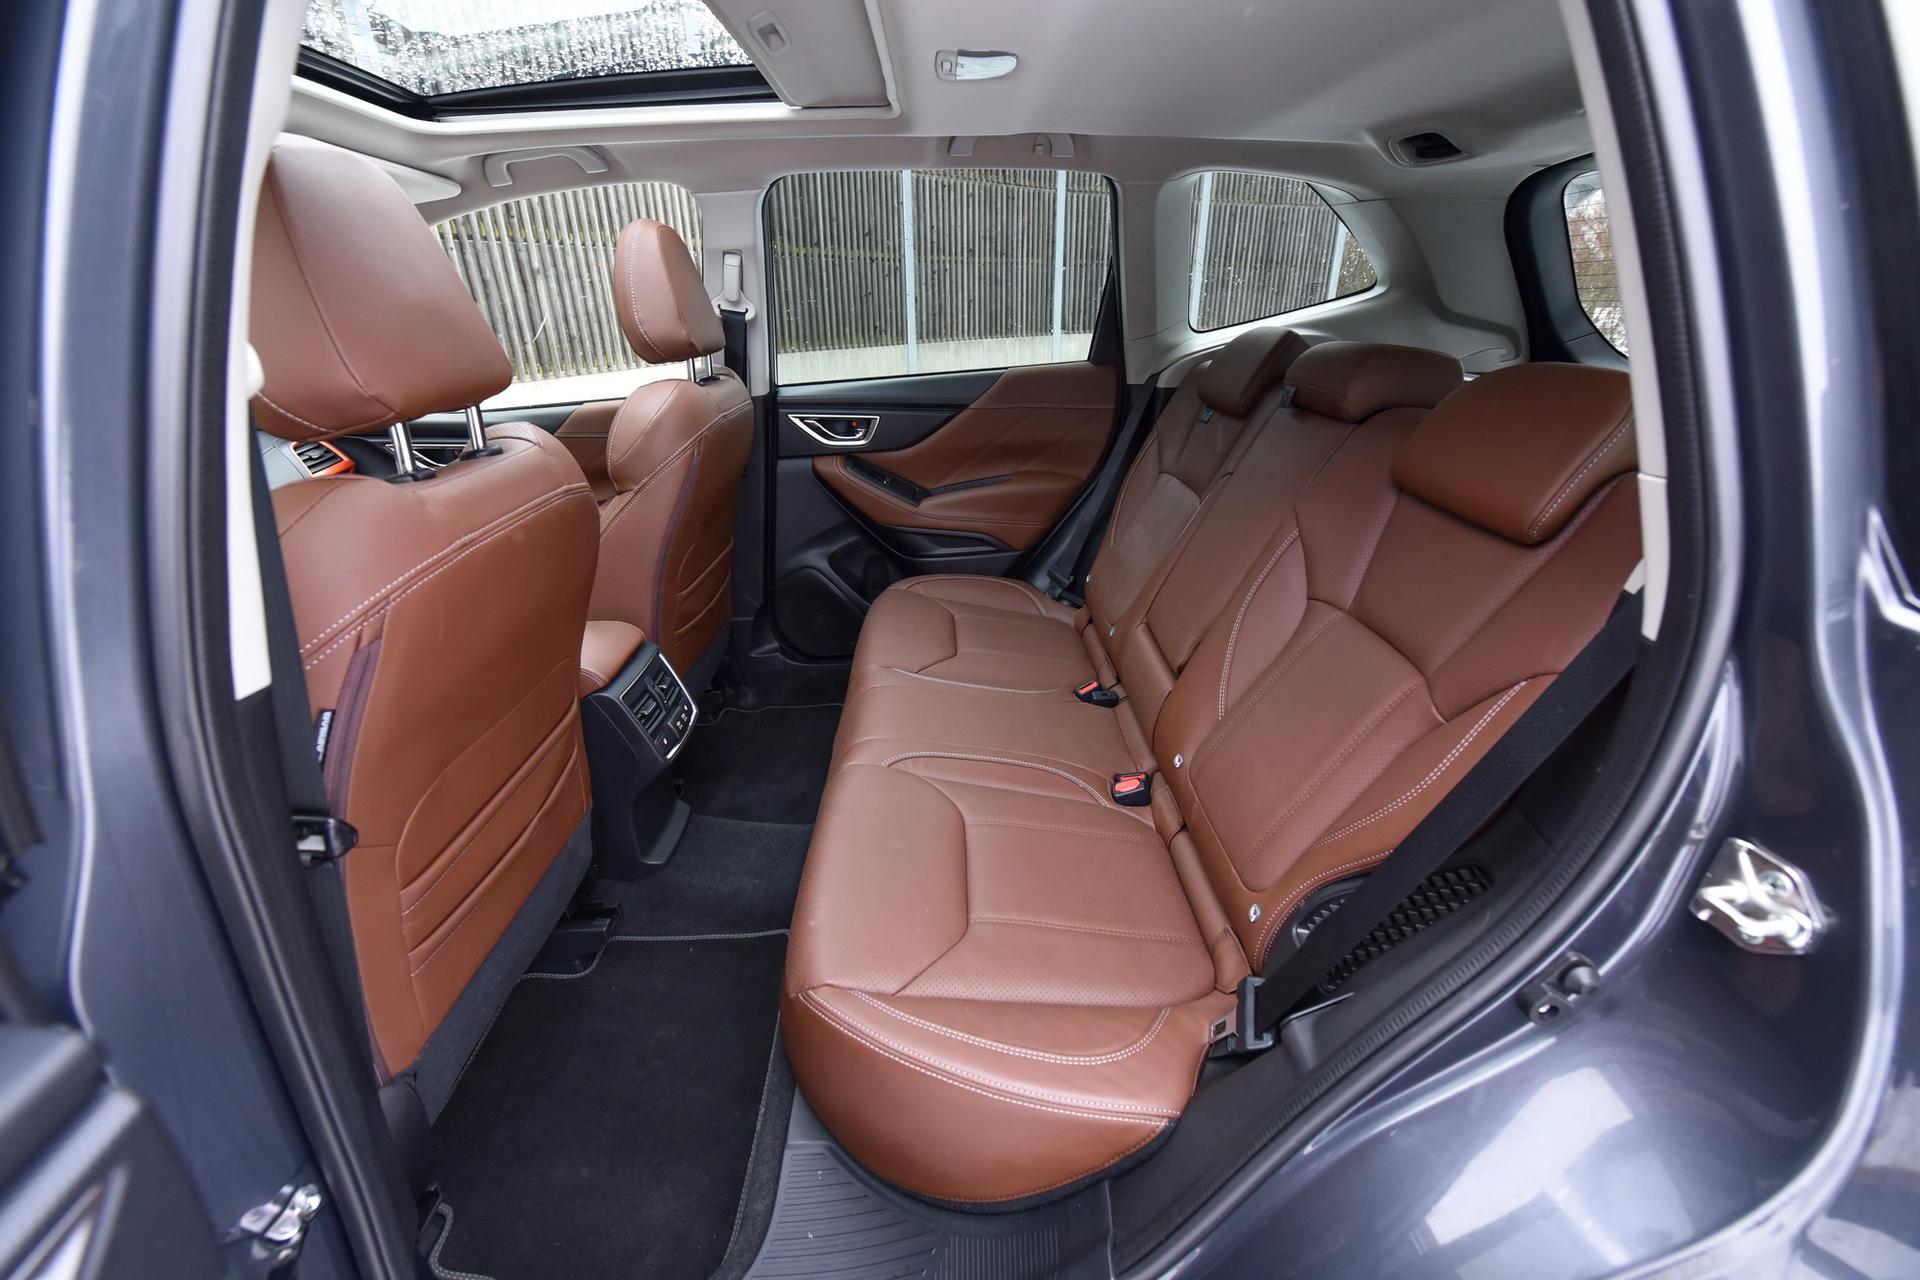 Subaru Forester Cabin interior - rear seats